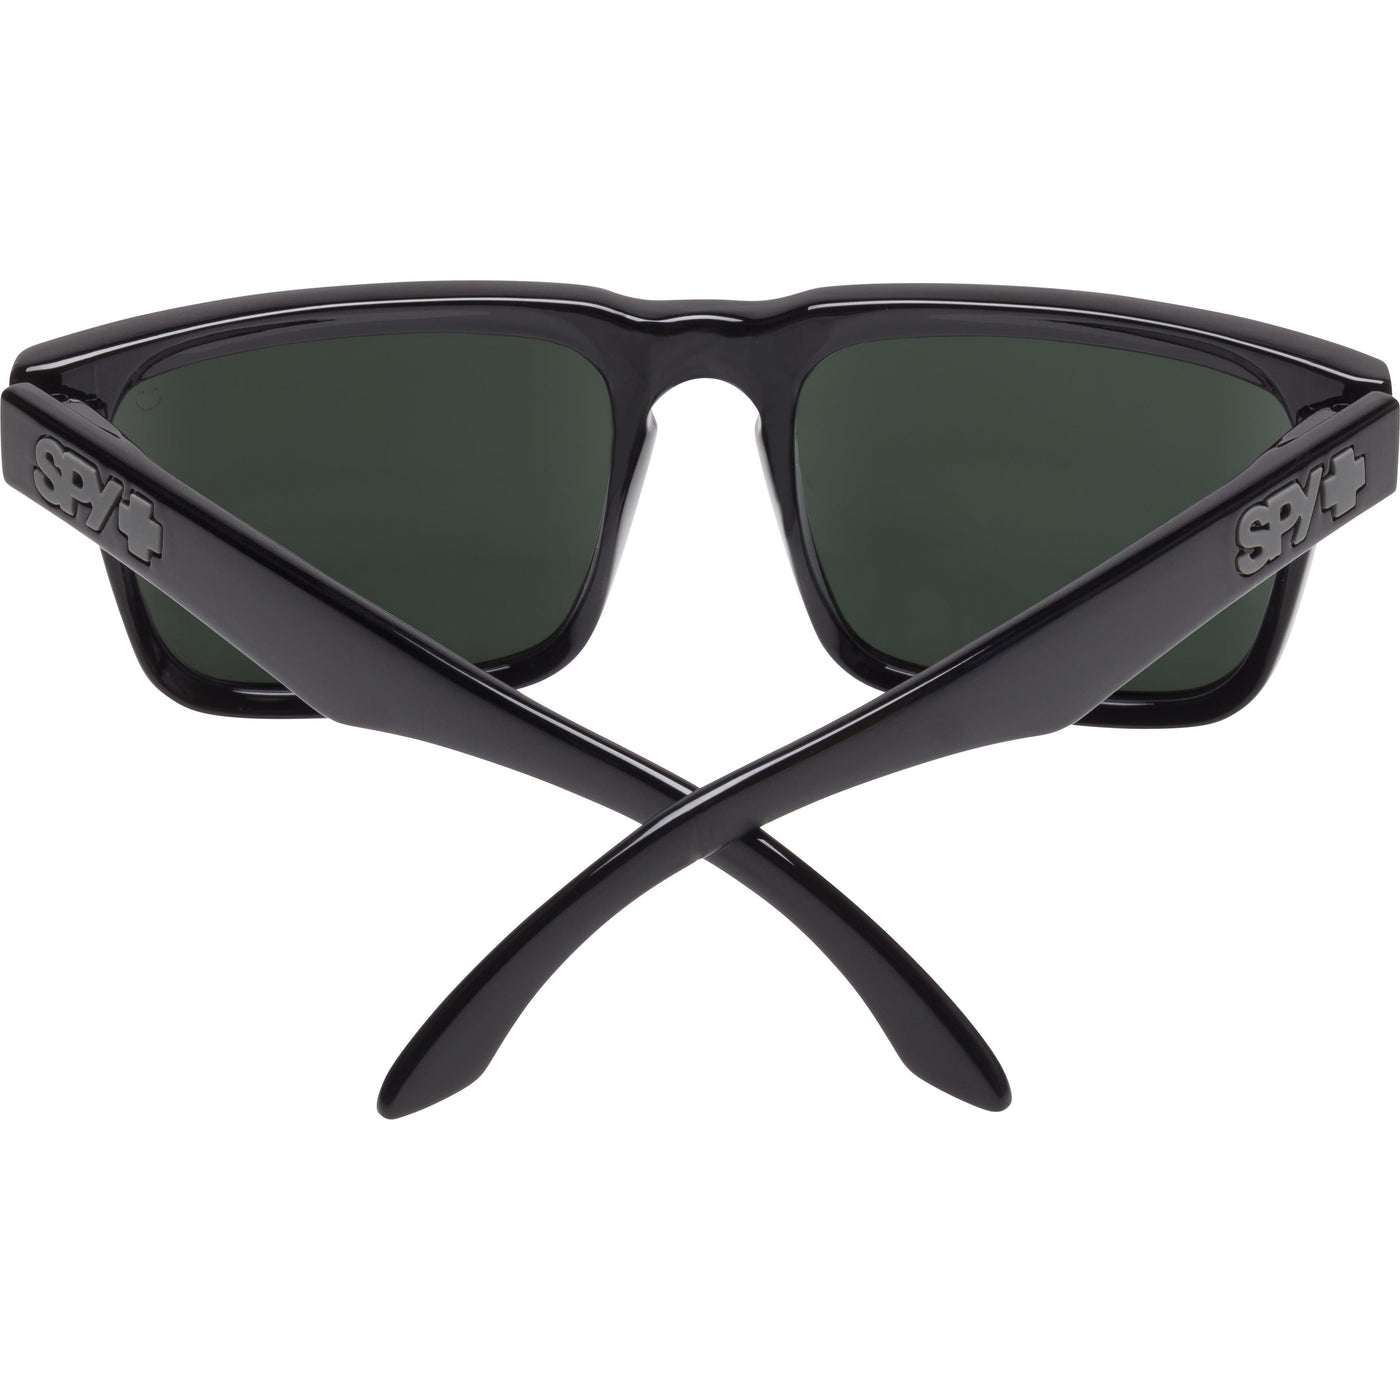 SPY HELM Sunglasses, Happy Lens - Gloss Black 8Lines Shop - Fast Shipping